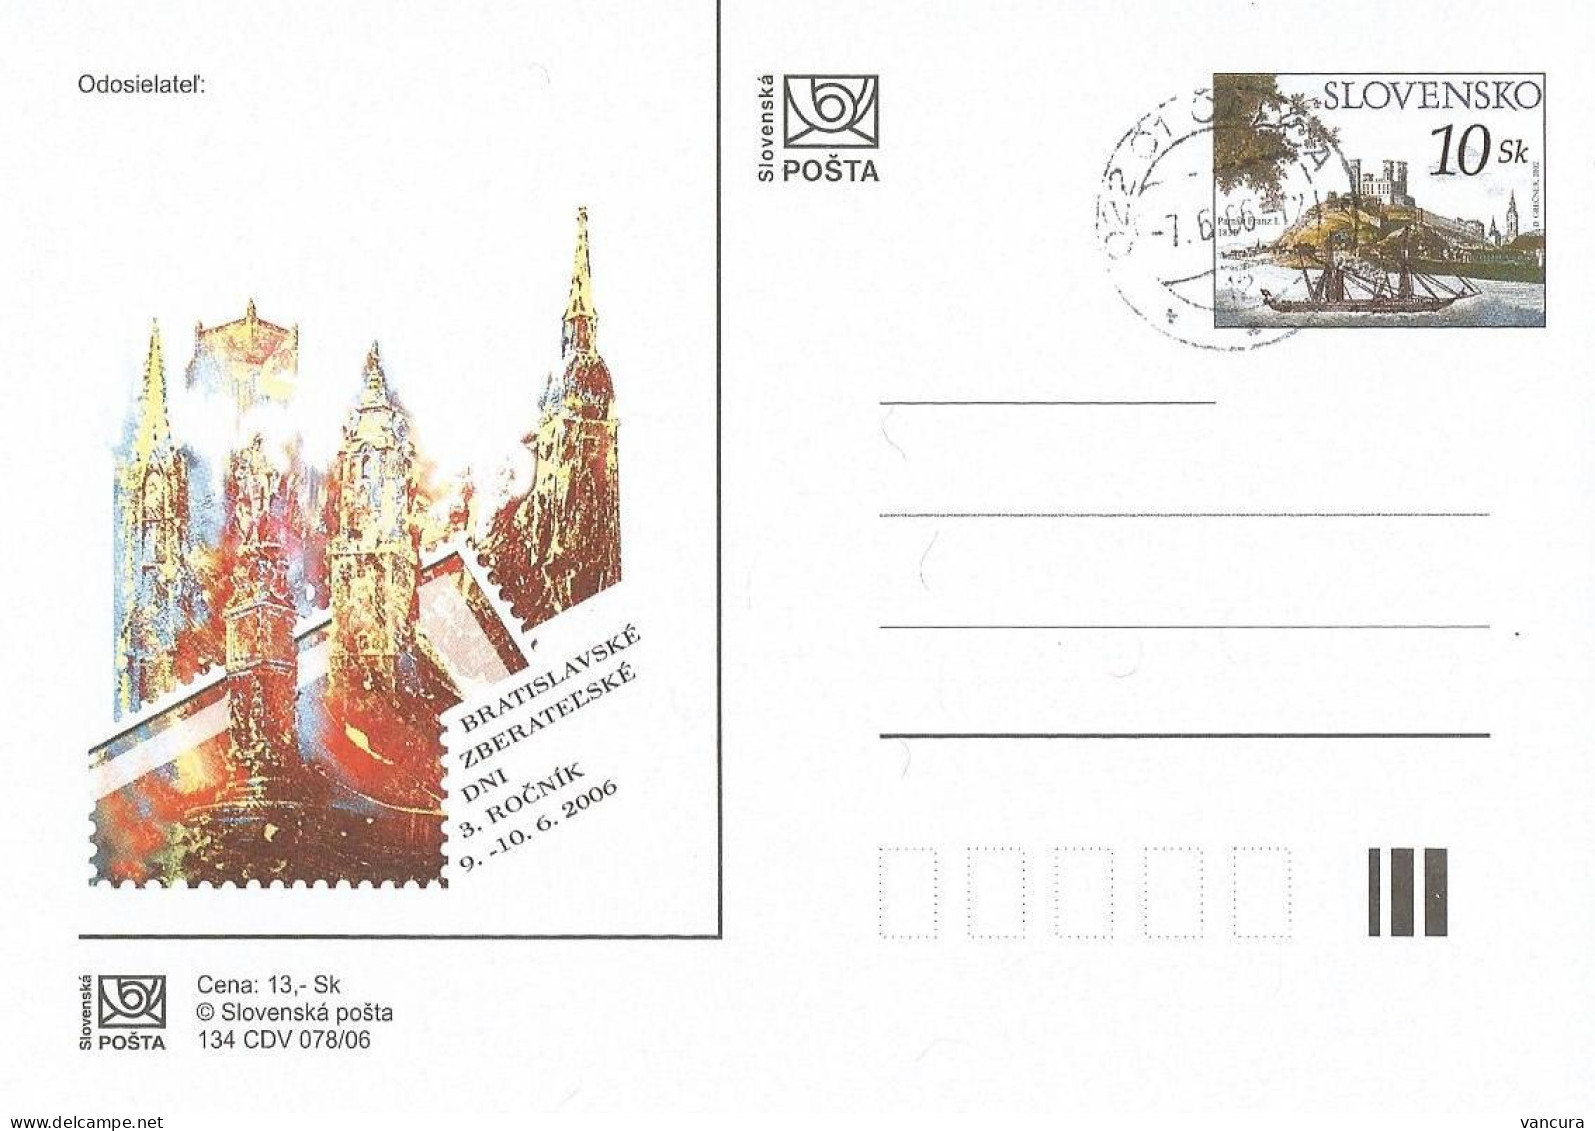 CDV 134 Slovakia Bratislava Collectors Day 2006 - Postcards